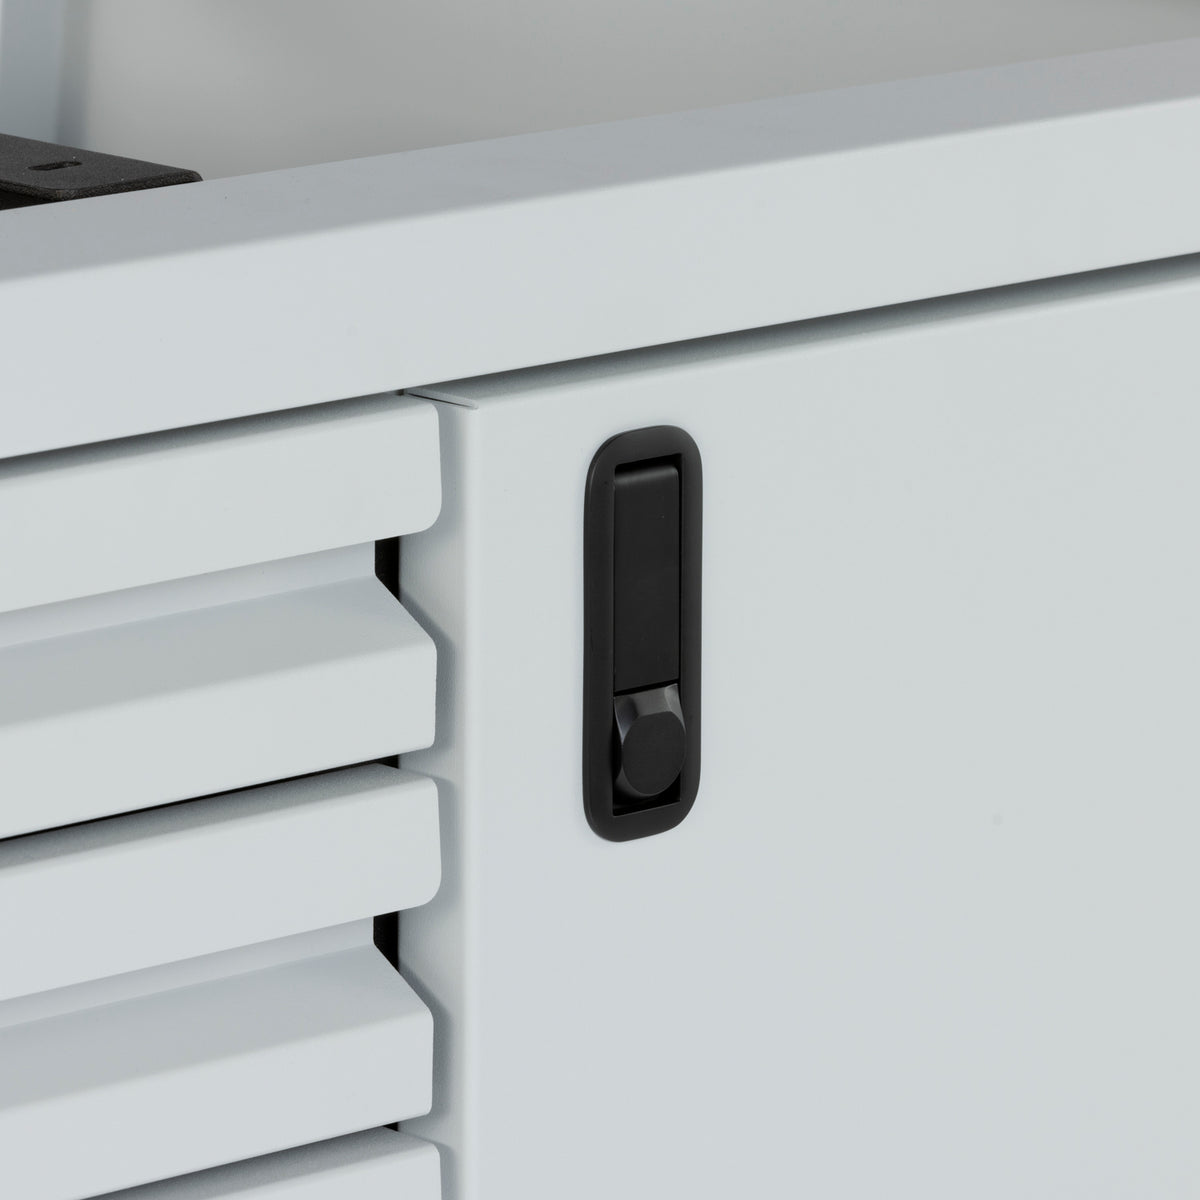 Door/Drawer Cabinet System - 32&quot; Wide